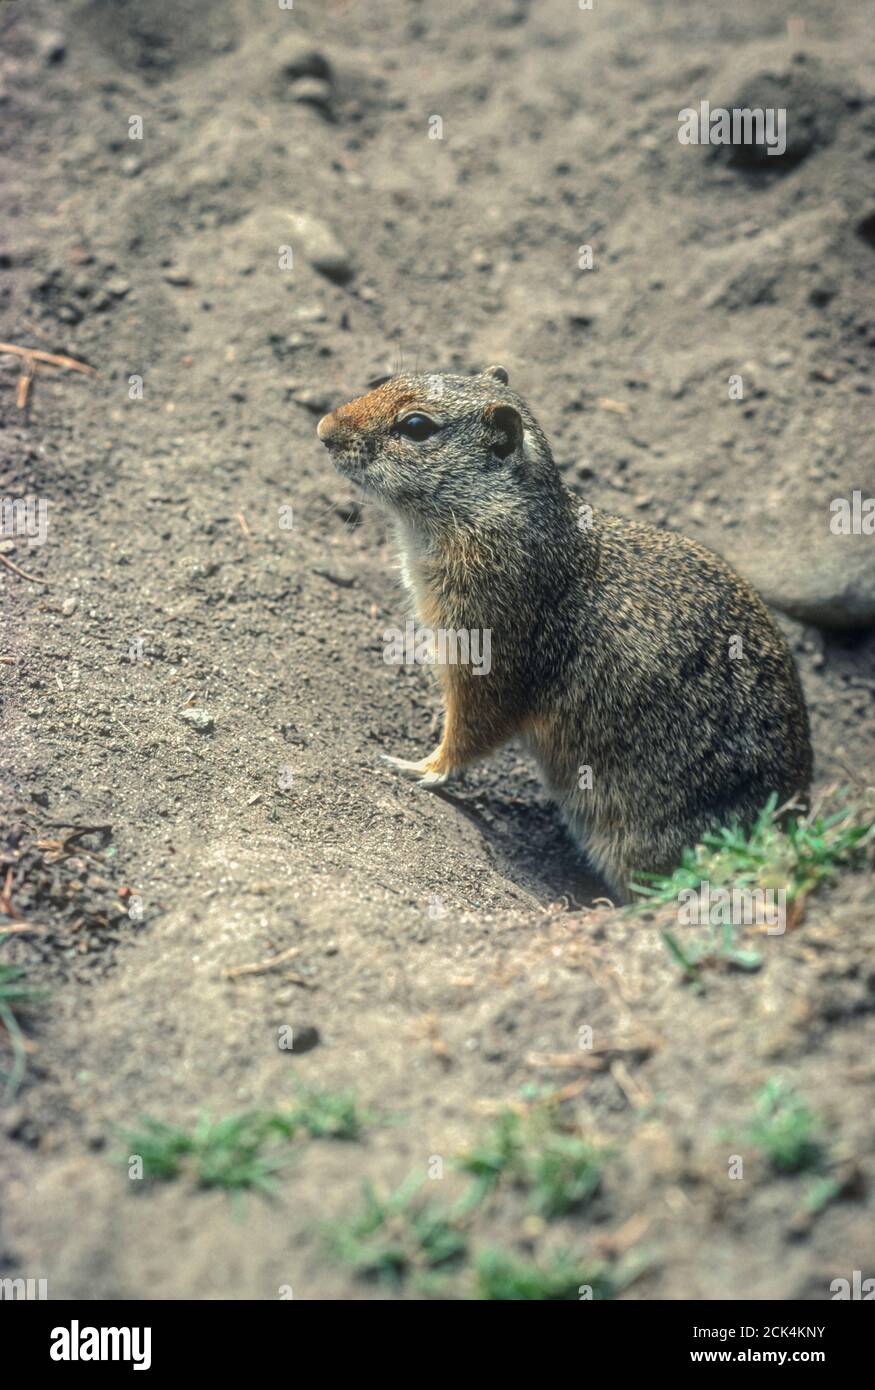 Uinta Ground Squirrel (Urocitellus armatus), früher (Citellus armatus), am Eingang zum Bau, Wyoming USA. Aus original Kodachrome 64 Transparenz. Stockfoto